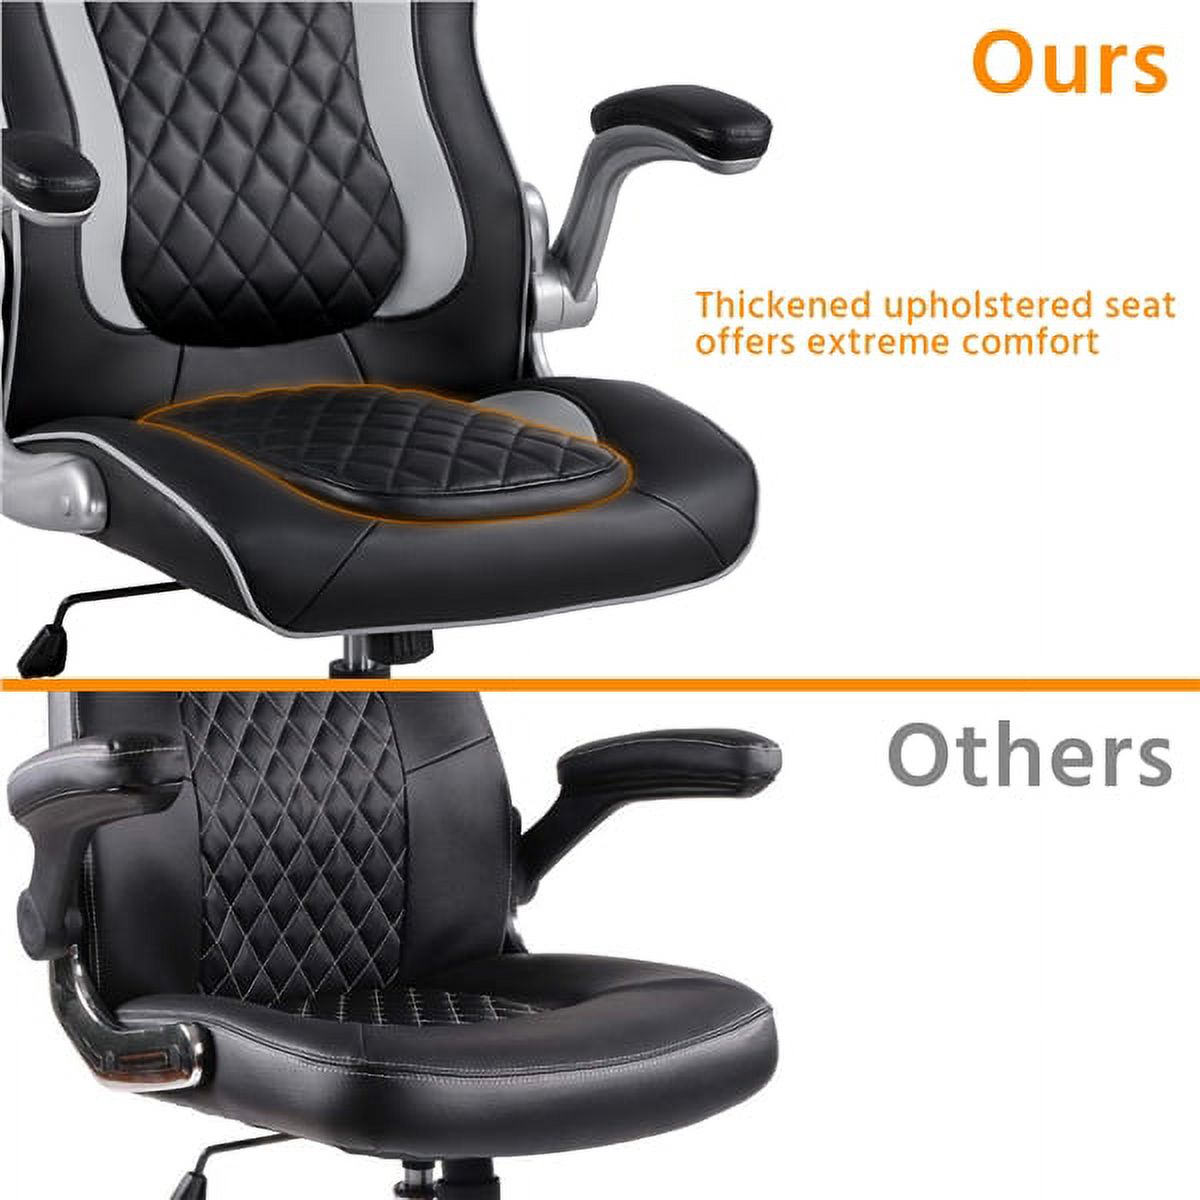 SmileMart Adjustable Ergonomic High Back Gaming Chair, Black/Gray - image 5 of 13